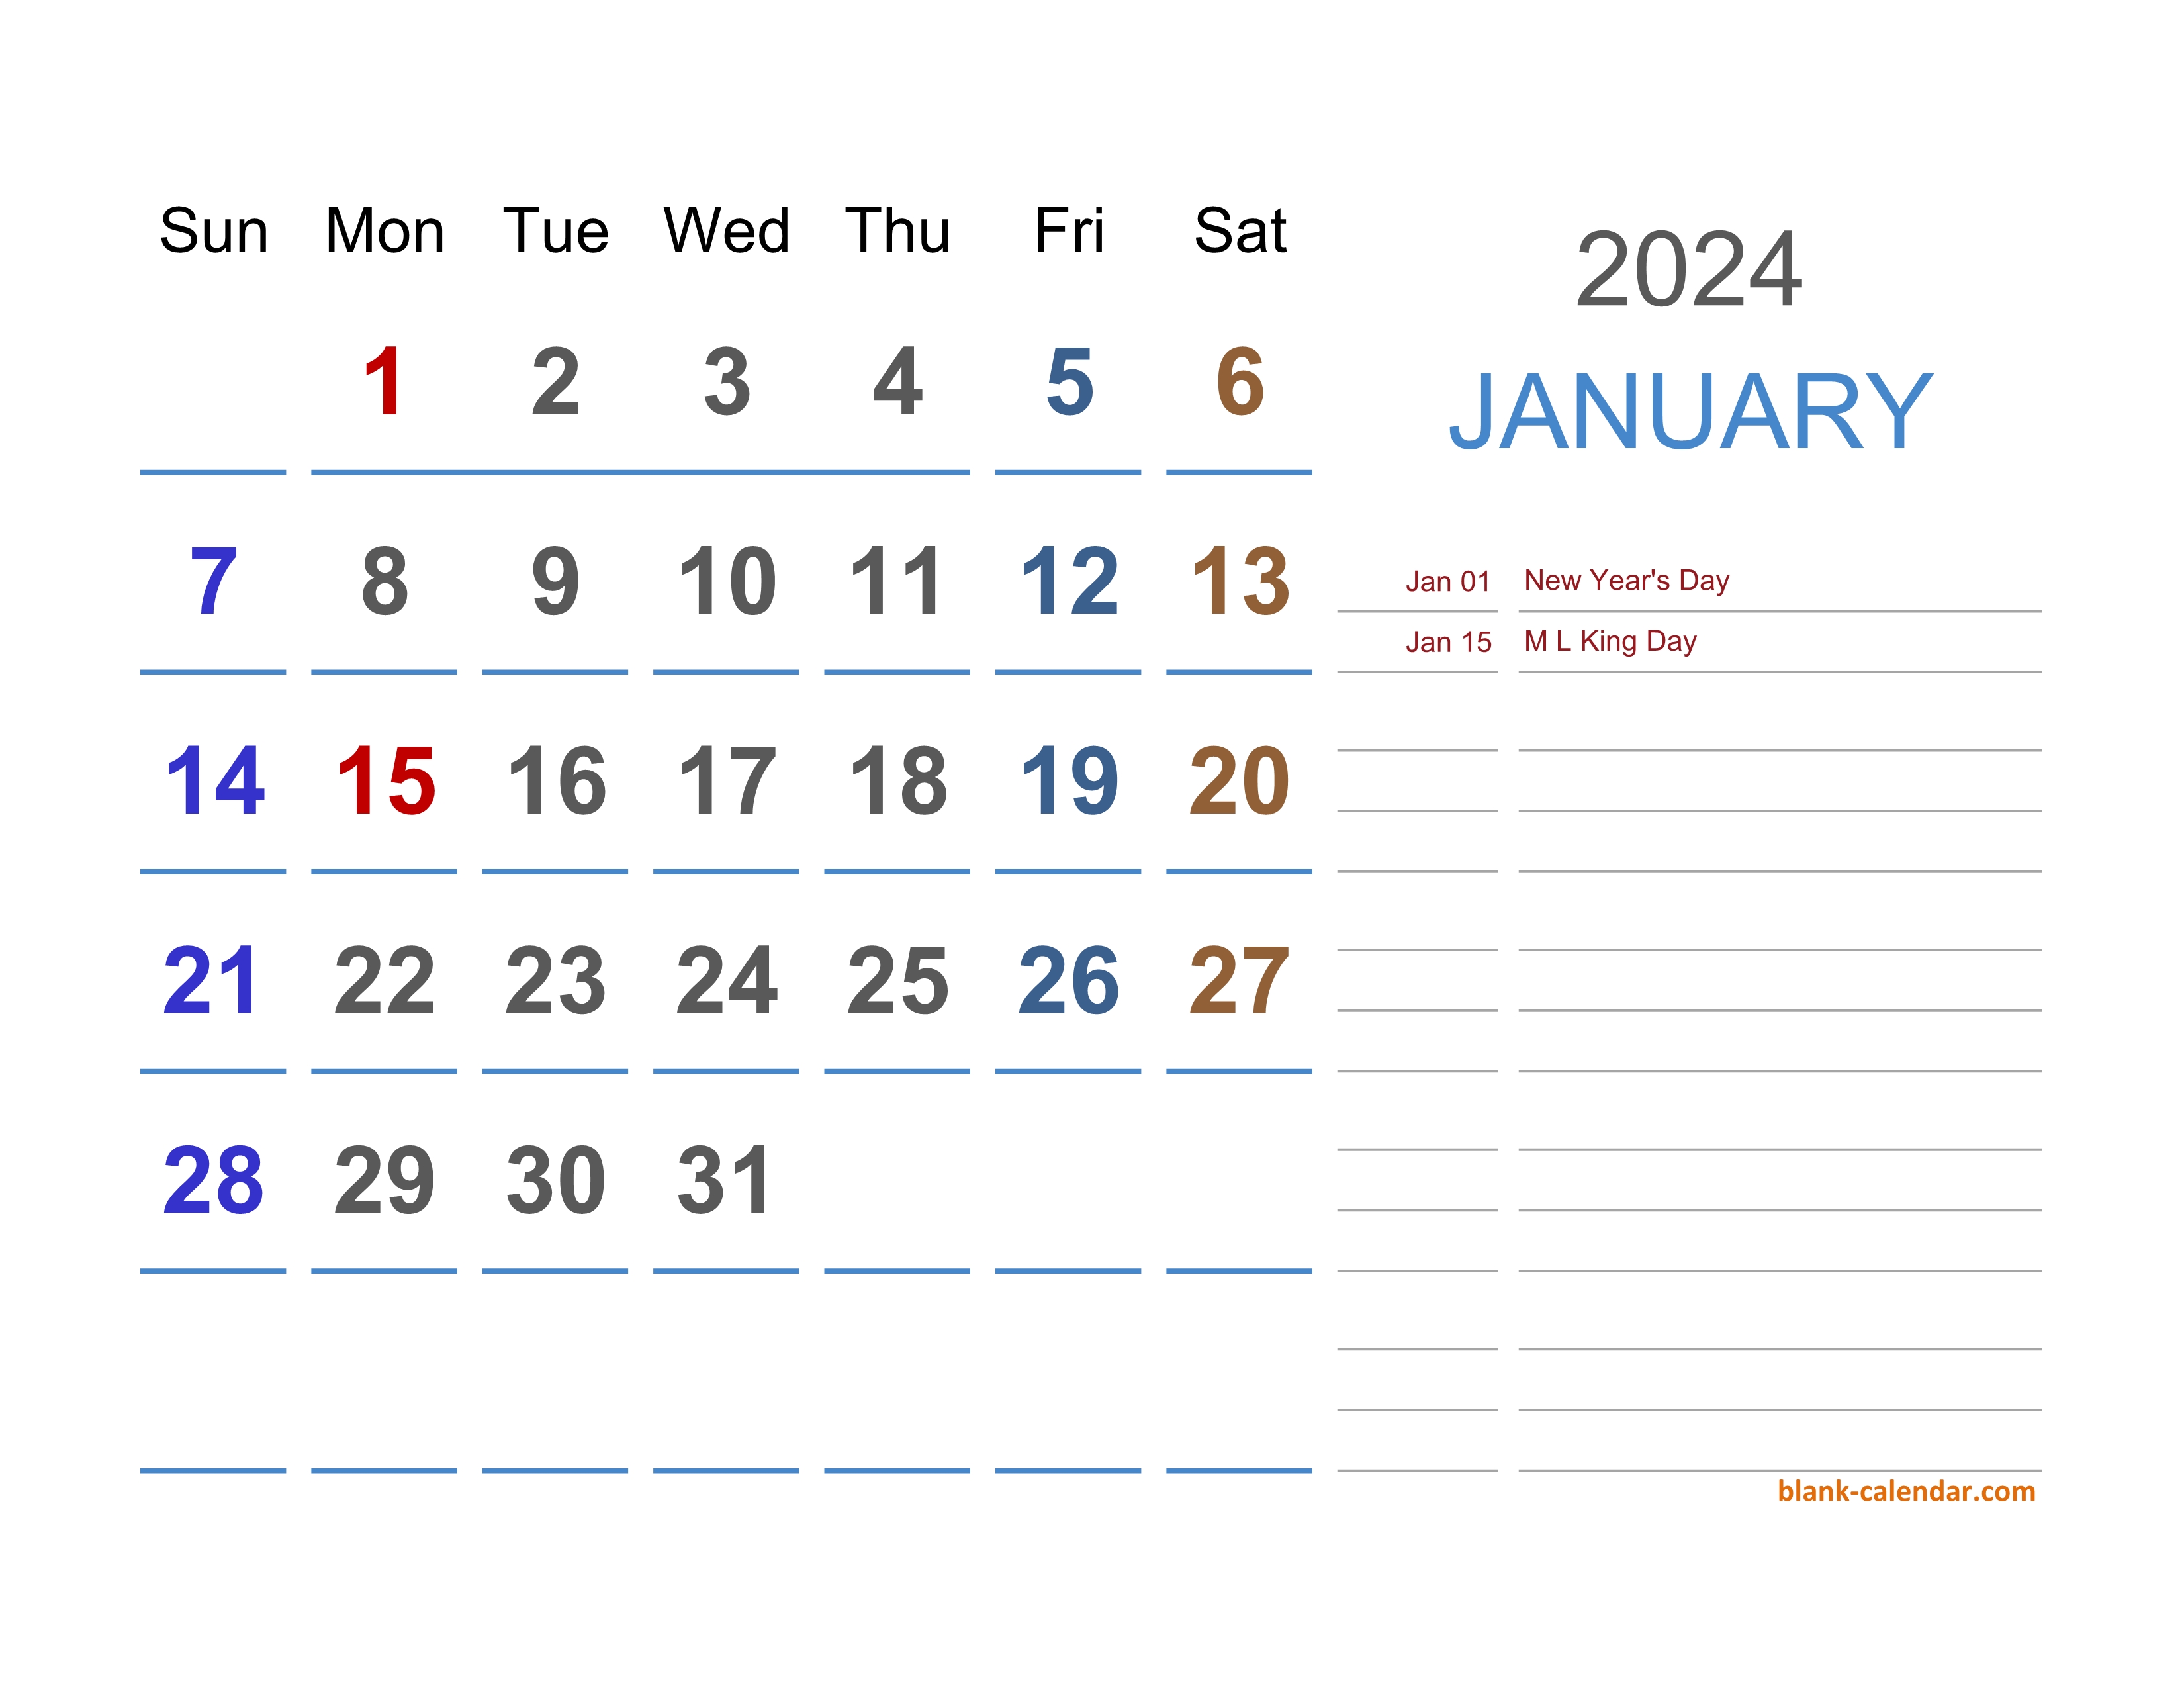 Лотерейный календарь 2024. Календарь на 2024 год. Календарь календарь 2024. Календарь 2024 эксель. Календарь март 2024.